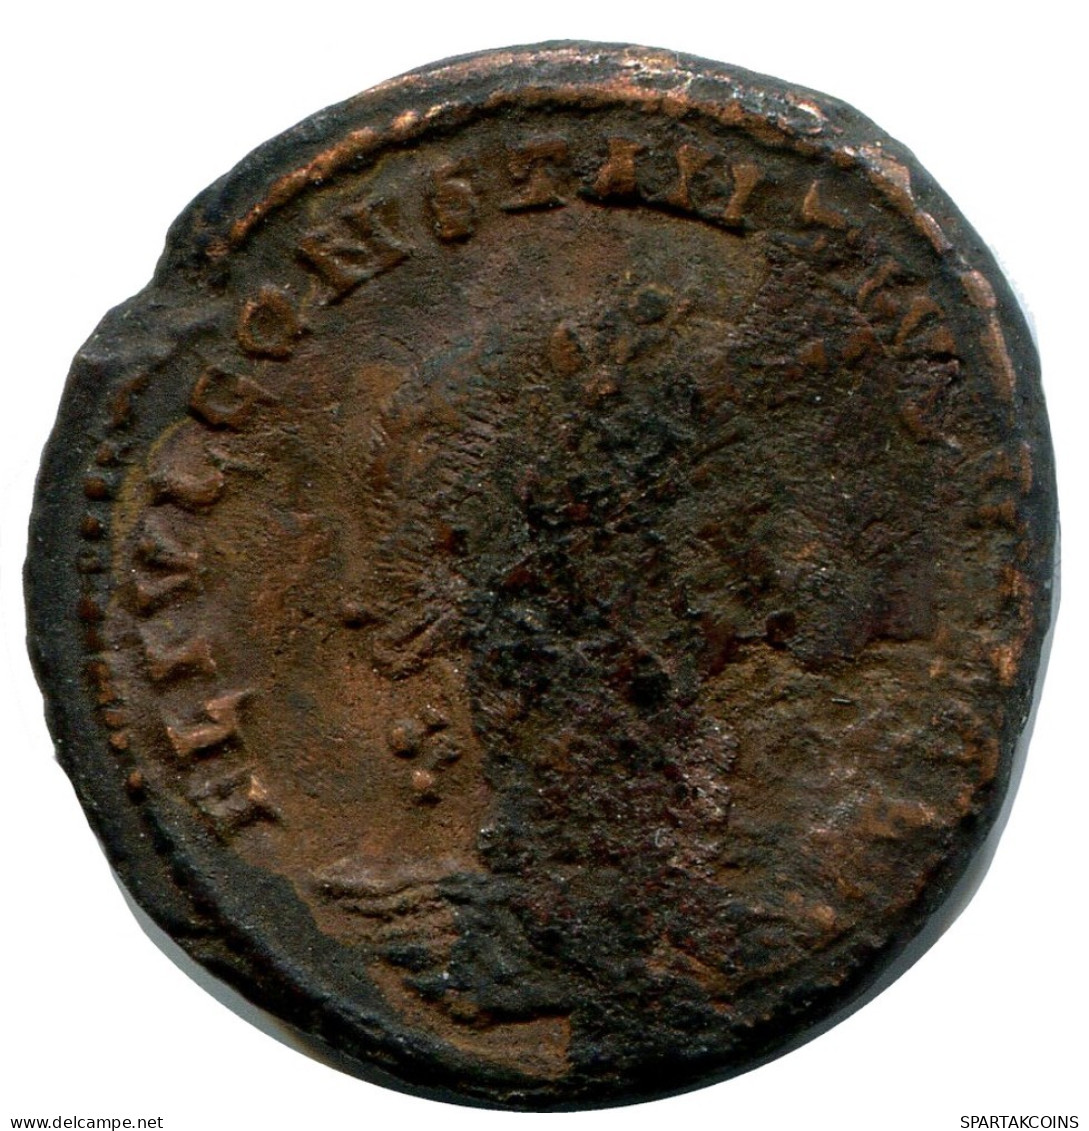 CONSTANTIUS II MINTED IN ALEKSANDRIA FOUND IN IHNASYAH HOARD #ANC10199.14.U.A - El Imperio Christiano (307 / 363)